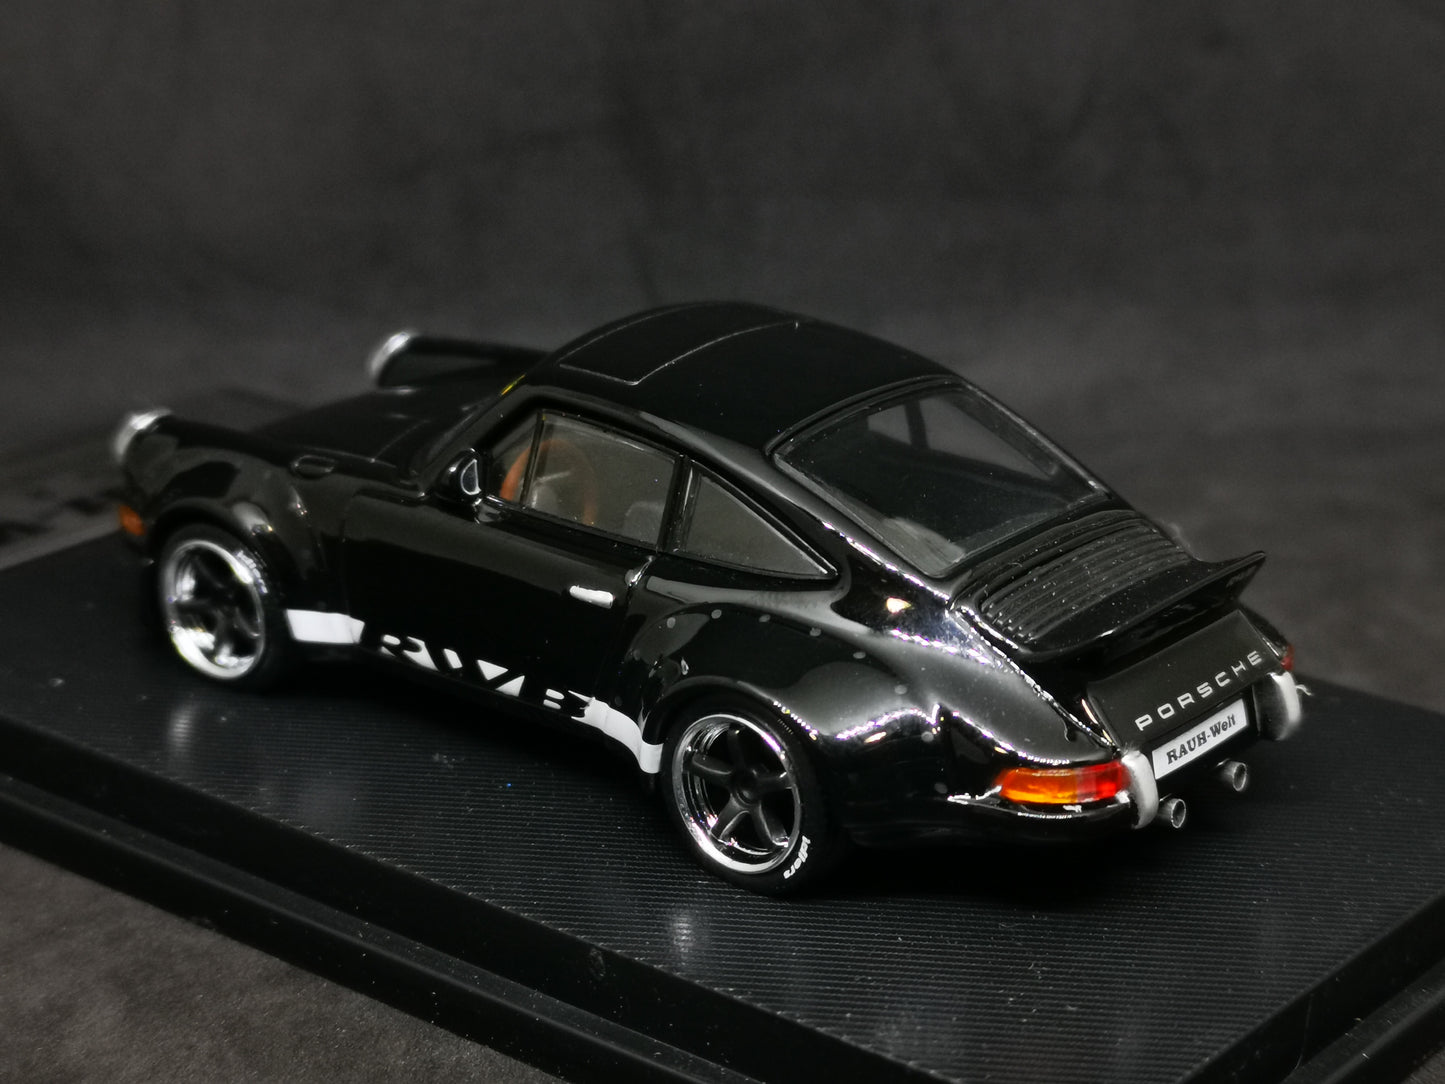 Model Collect RWB Porsche 930 Ducktail Wing Metallic black 1:60 SCALE